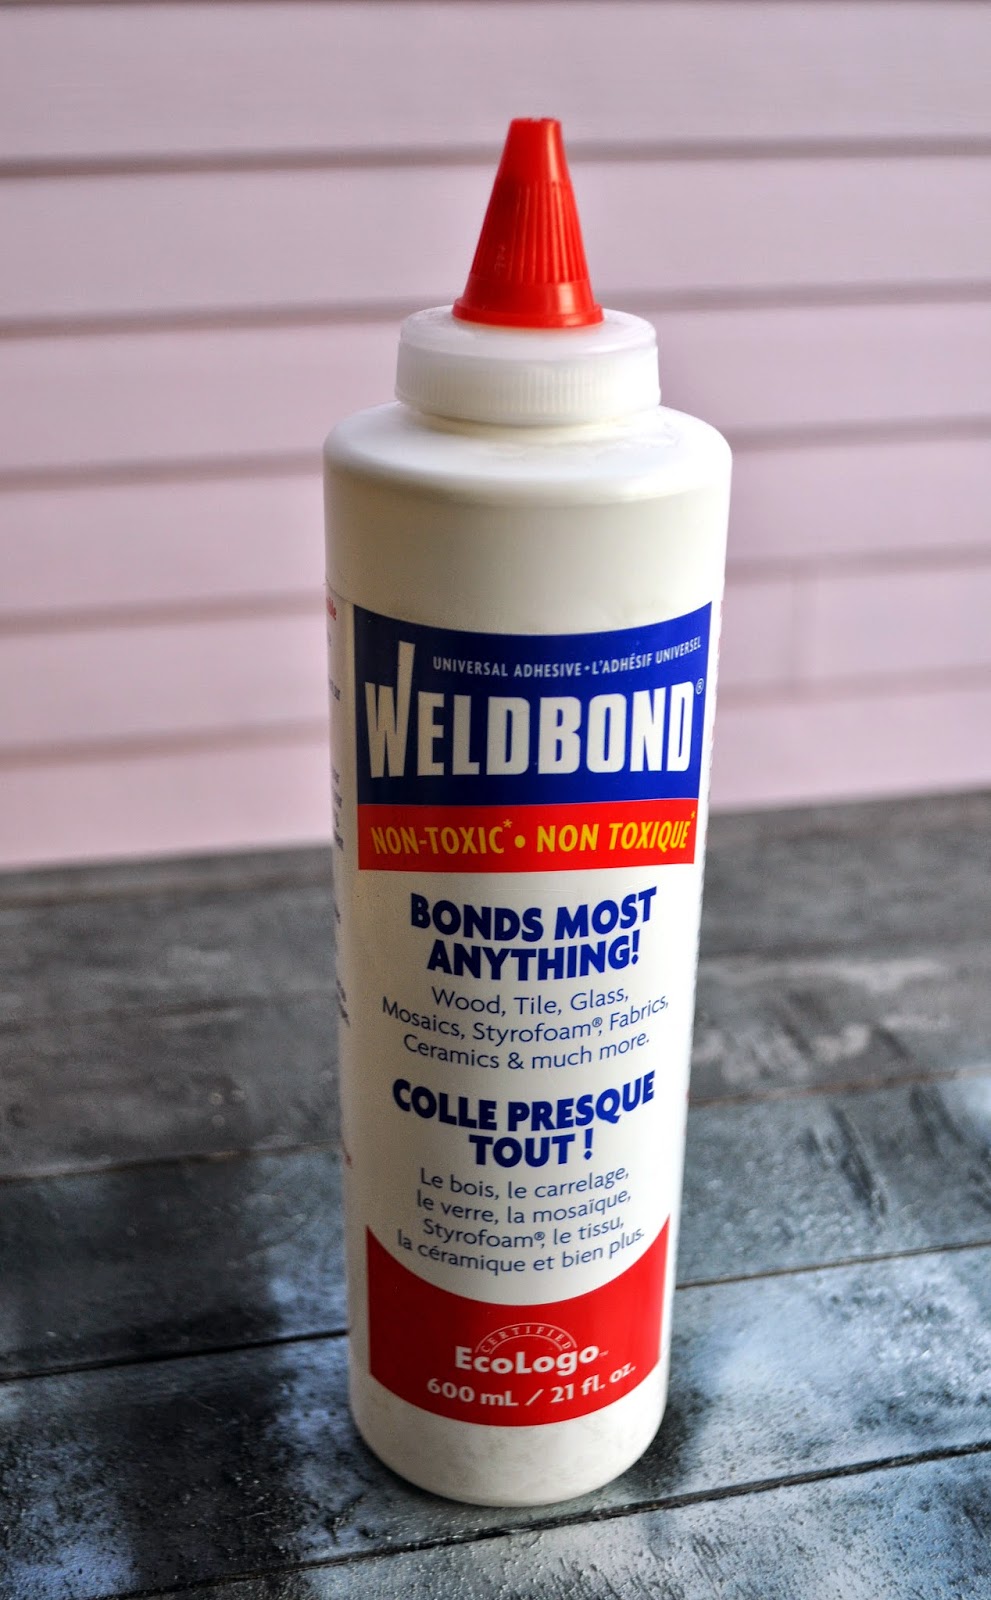 Weldbond Glue